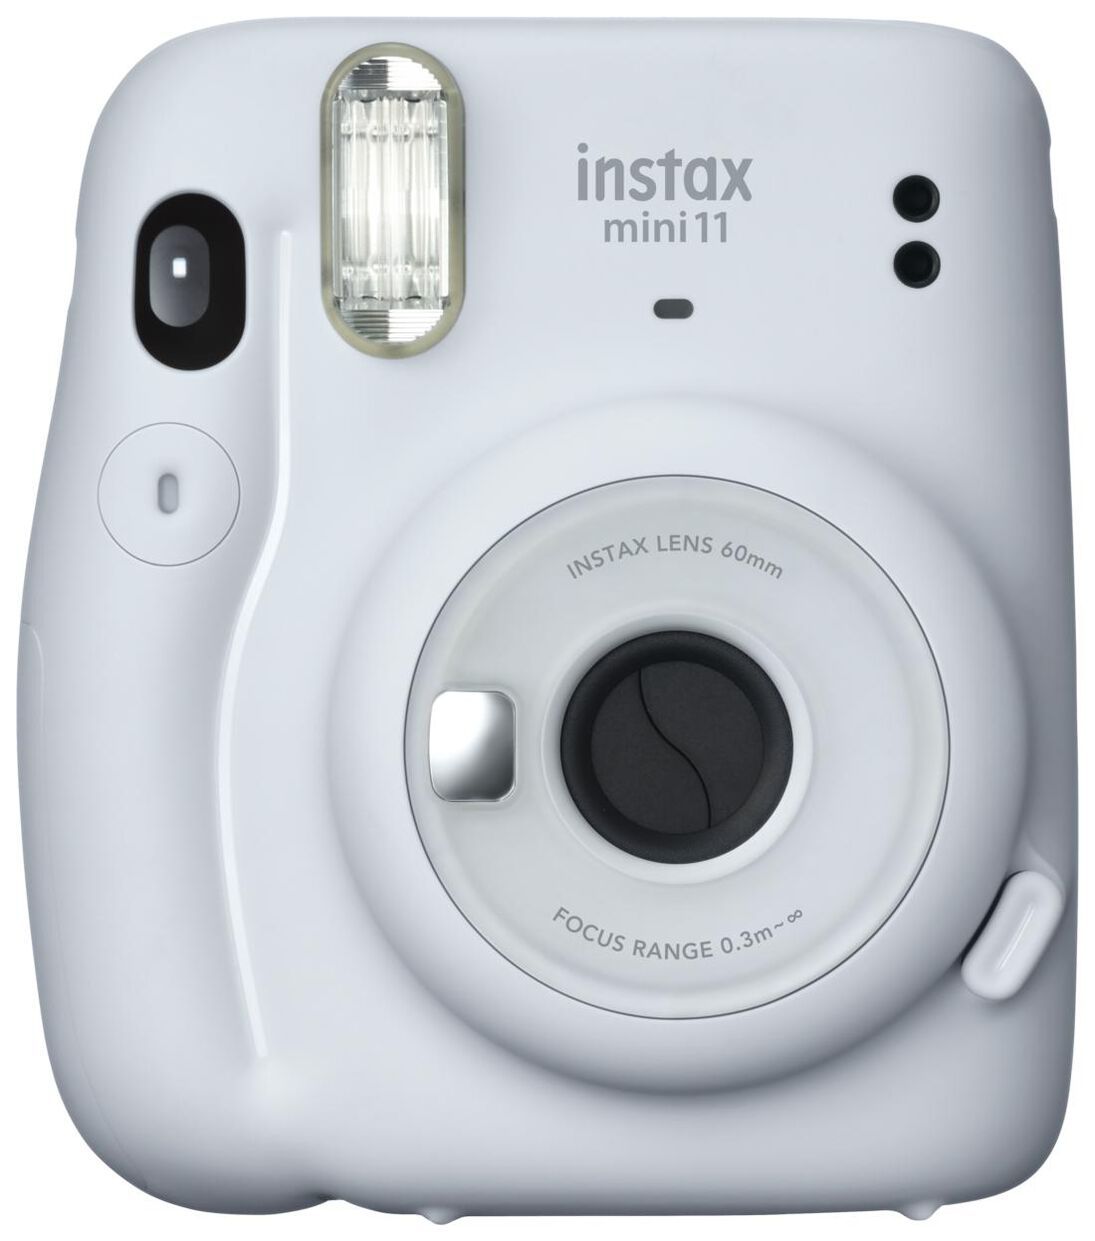 Fujifilm Instax mini 11 instant camera